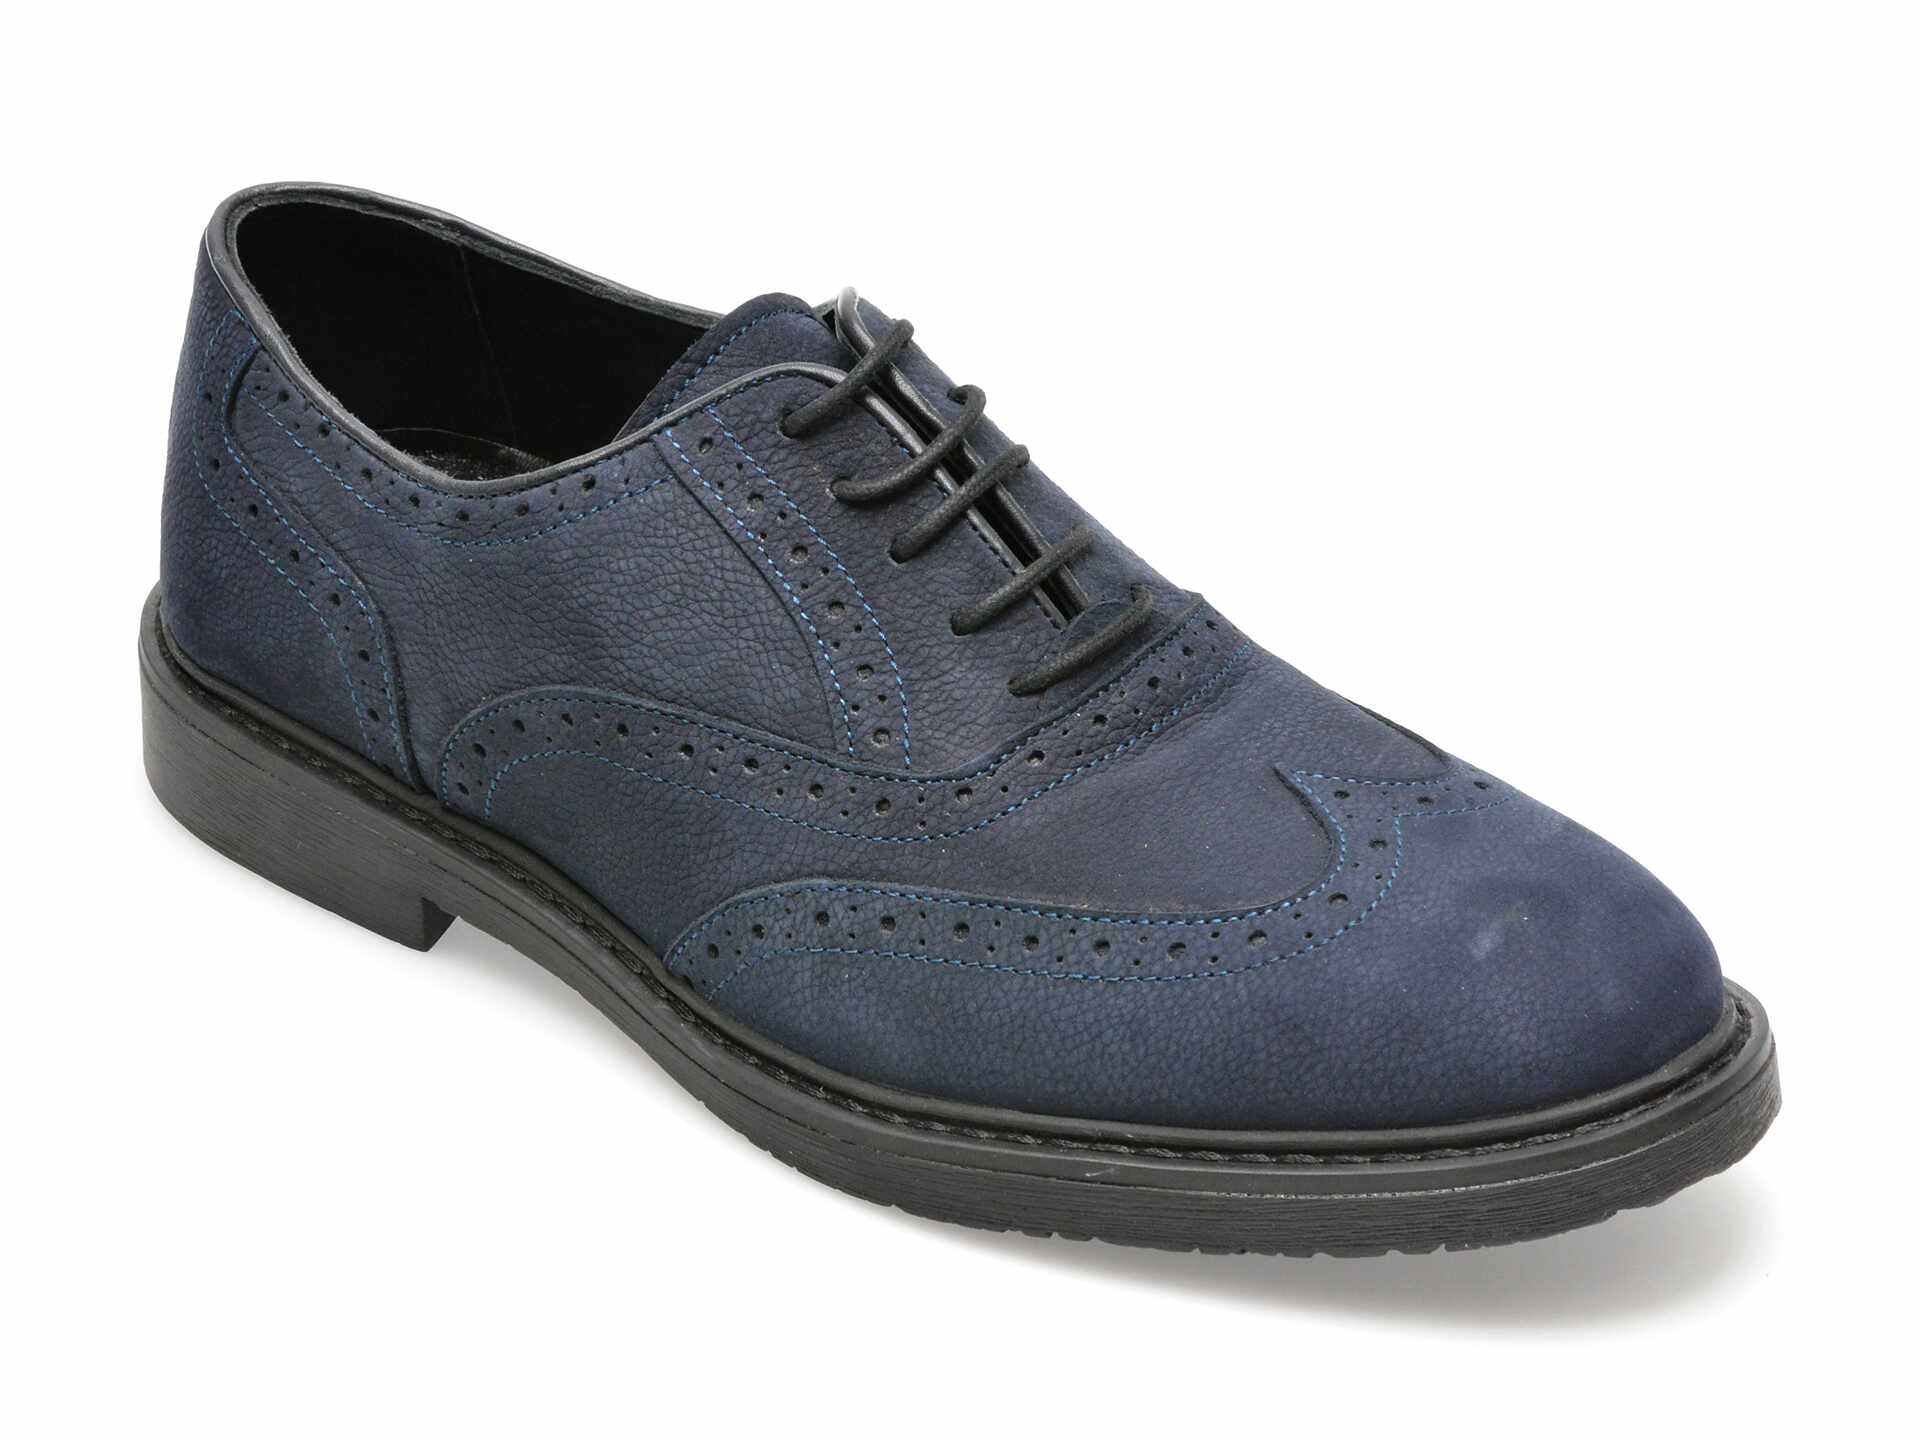 Pantofi OTTER bleumarin, EF88, din nabuc